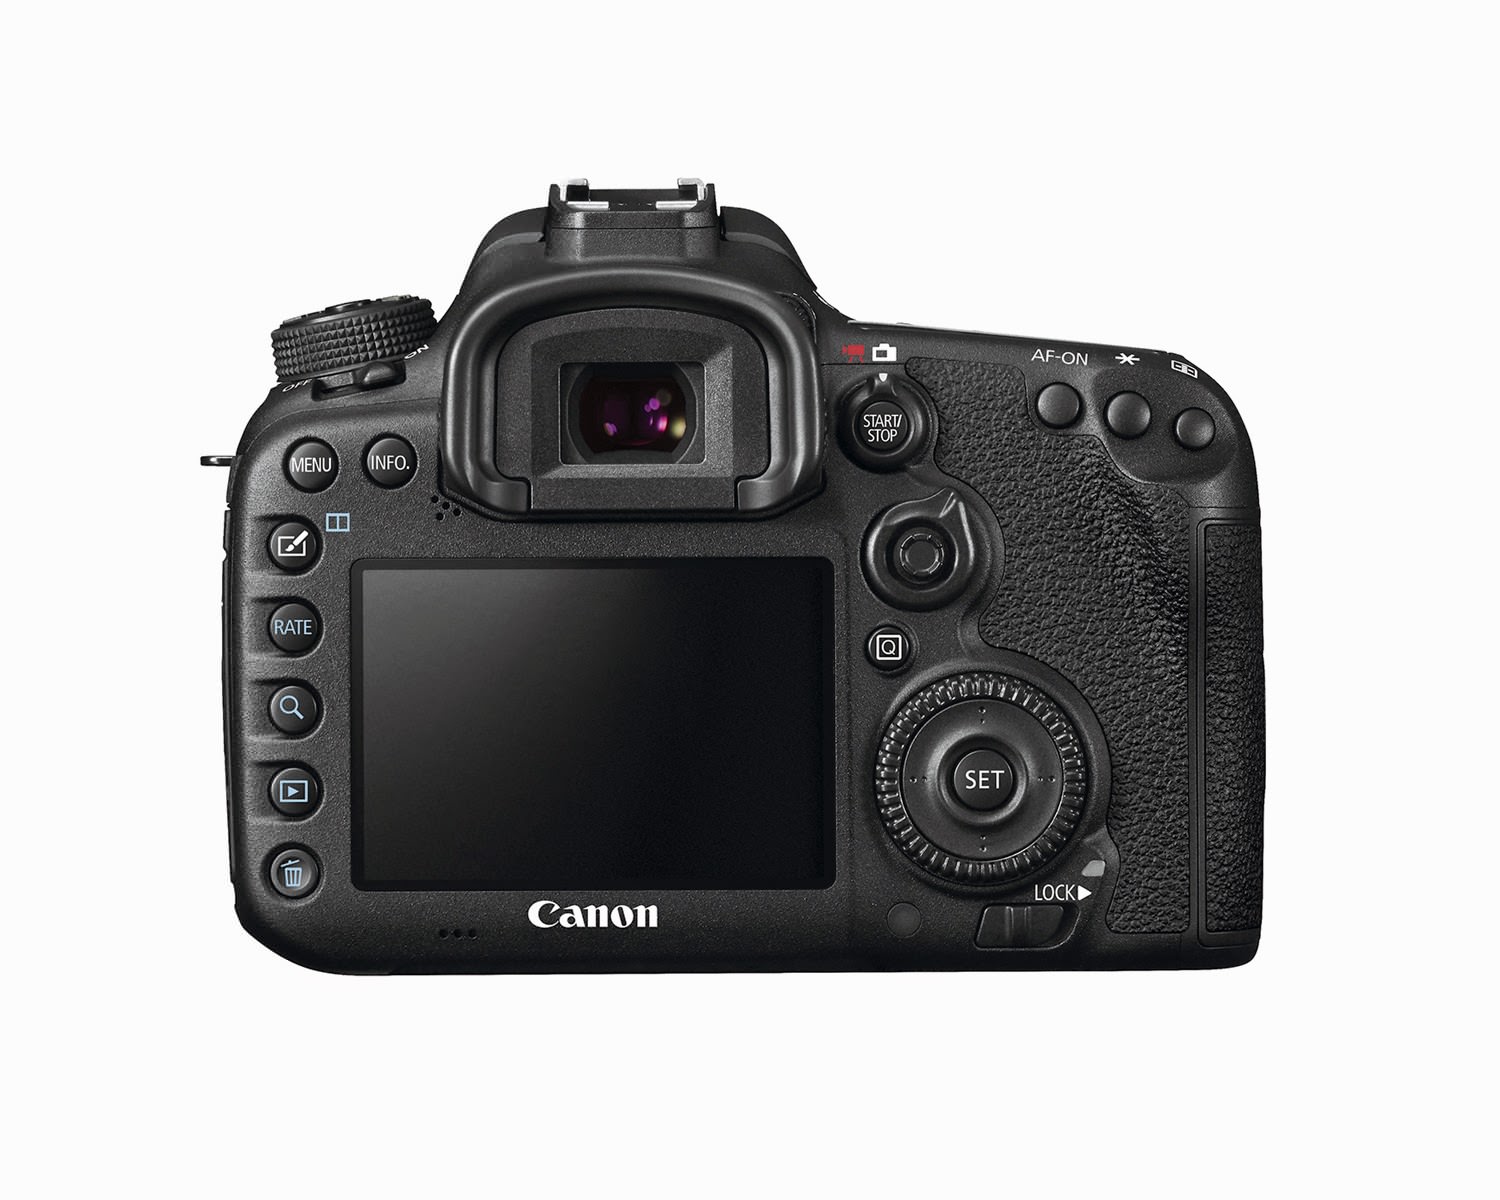 Canon7DMarkIIrear image 